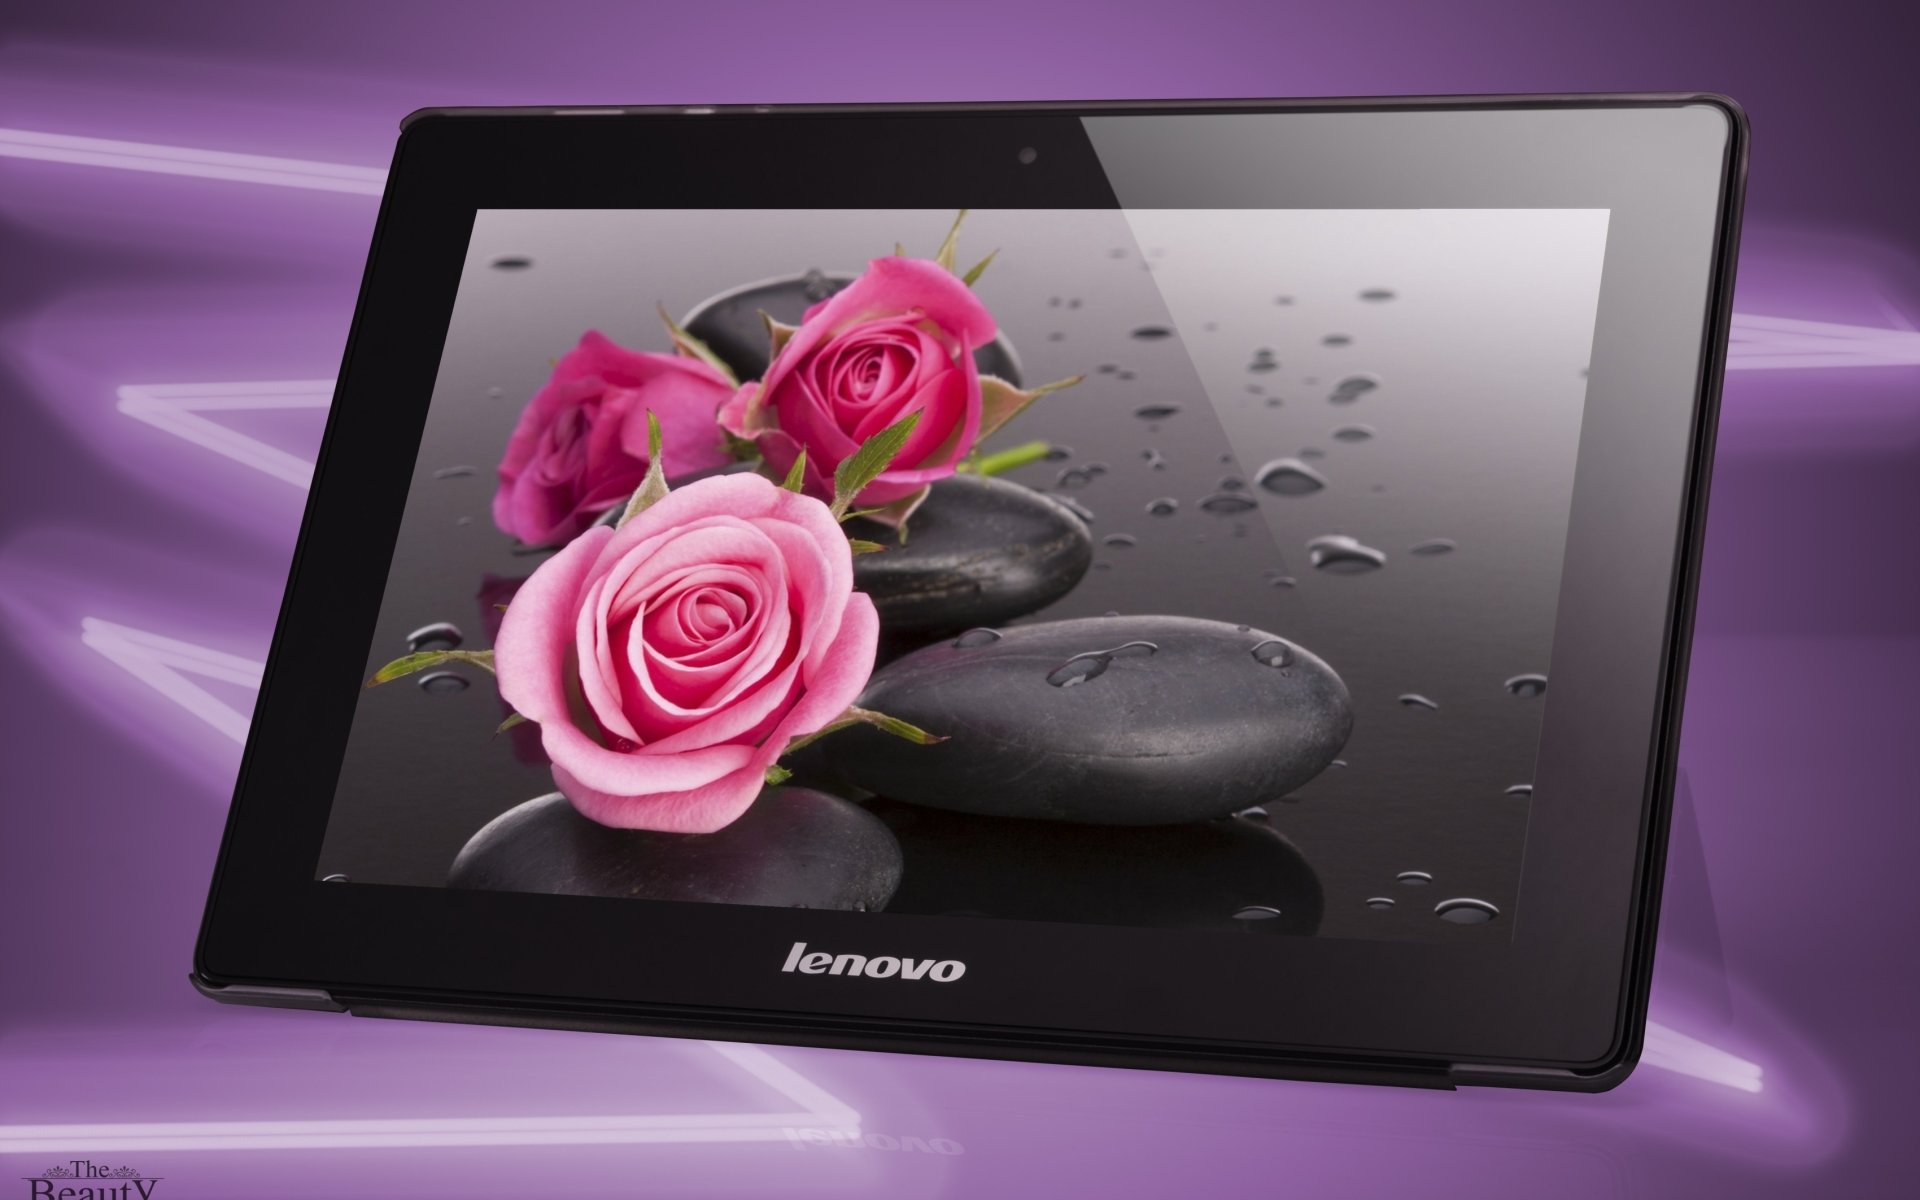 lenovo tablet wallpaper,pink,product,rose family,rose,petal